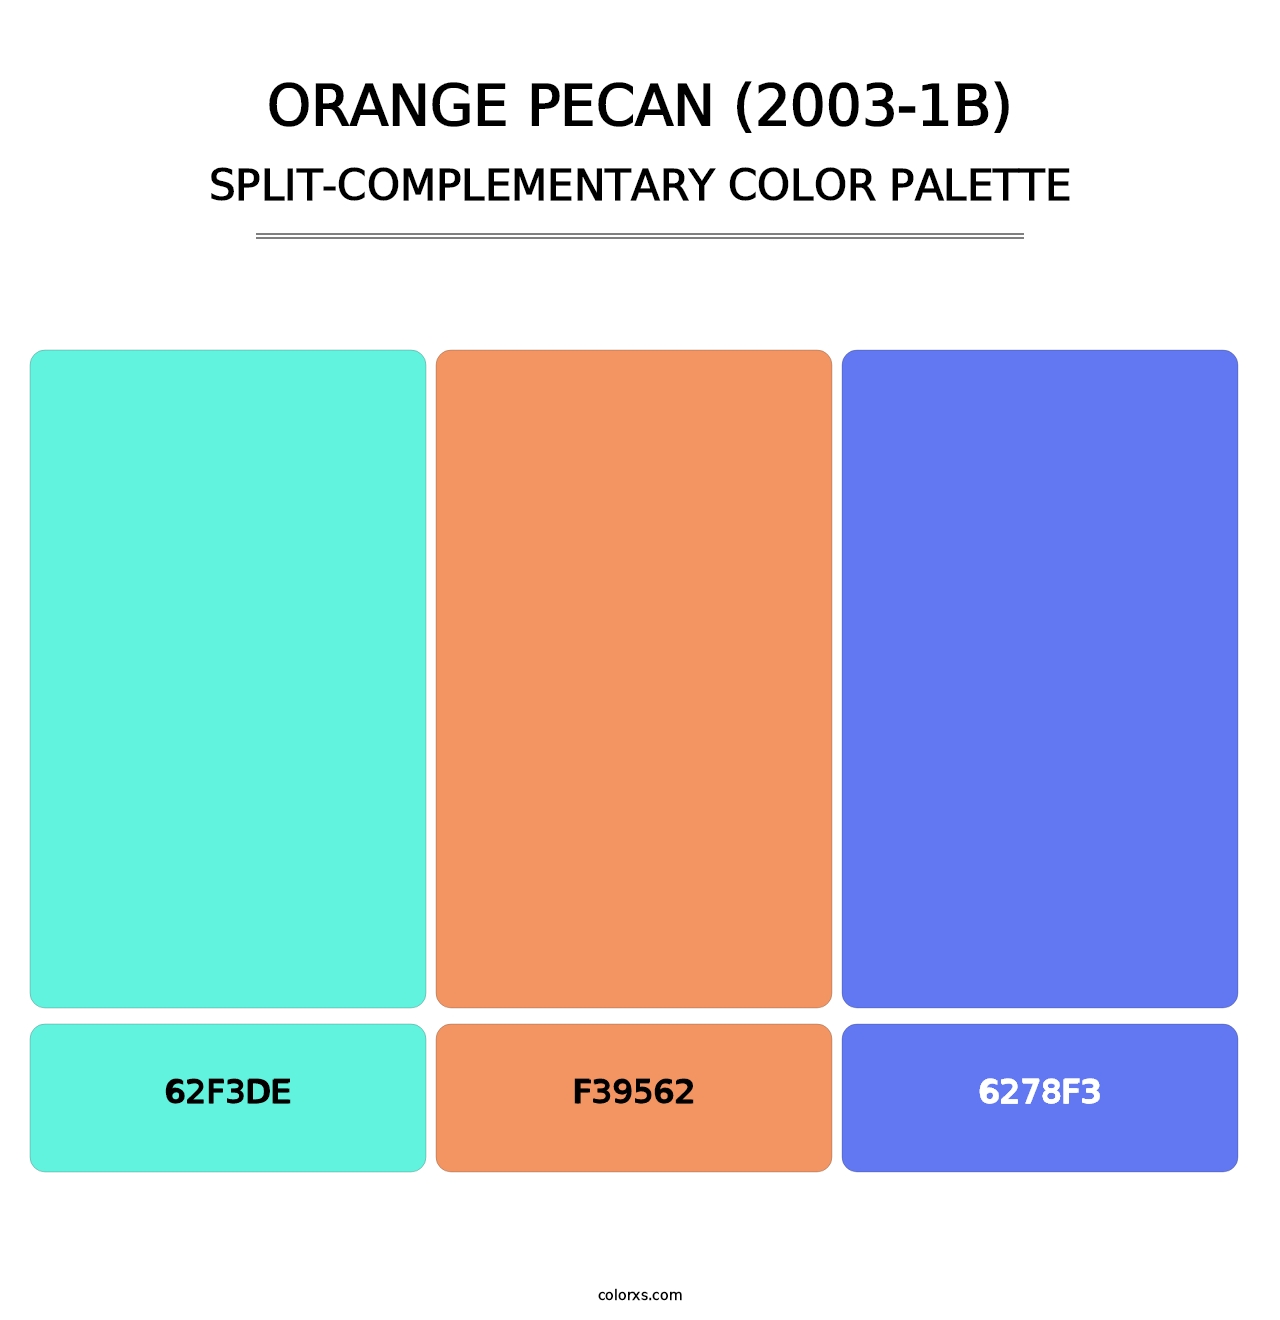 Orange Pecan (2003-1B) - Split-Complementary Color Palette